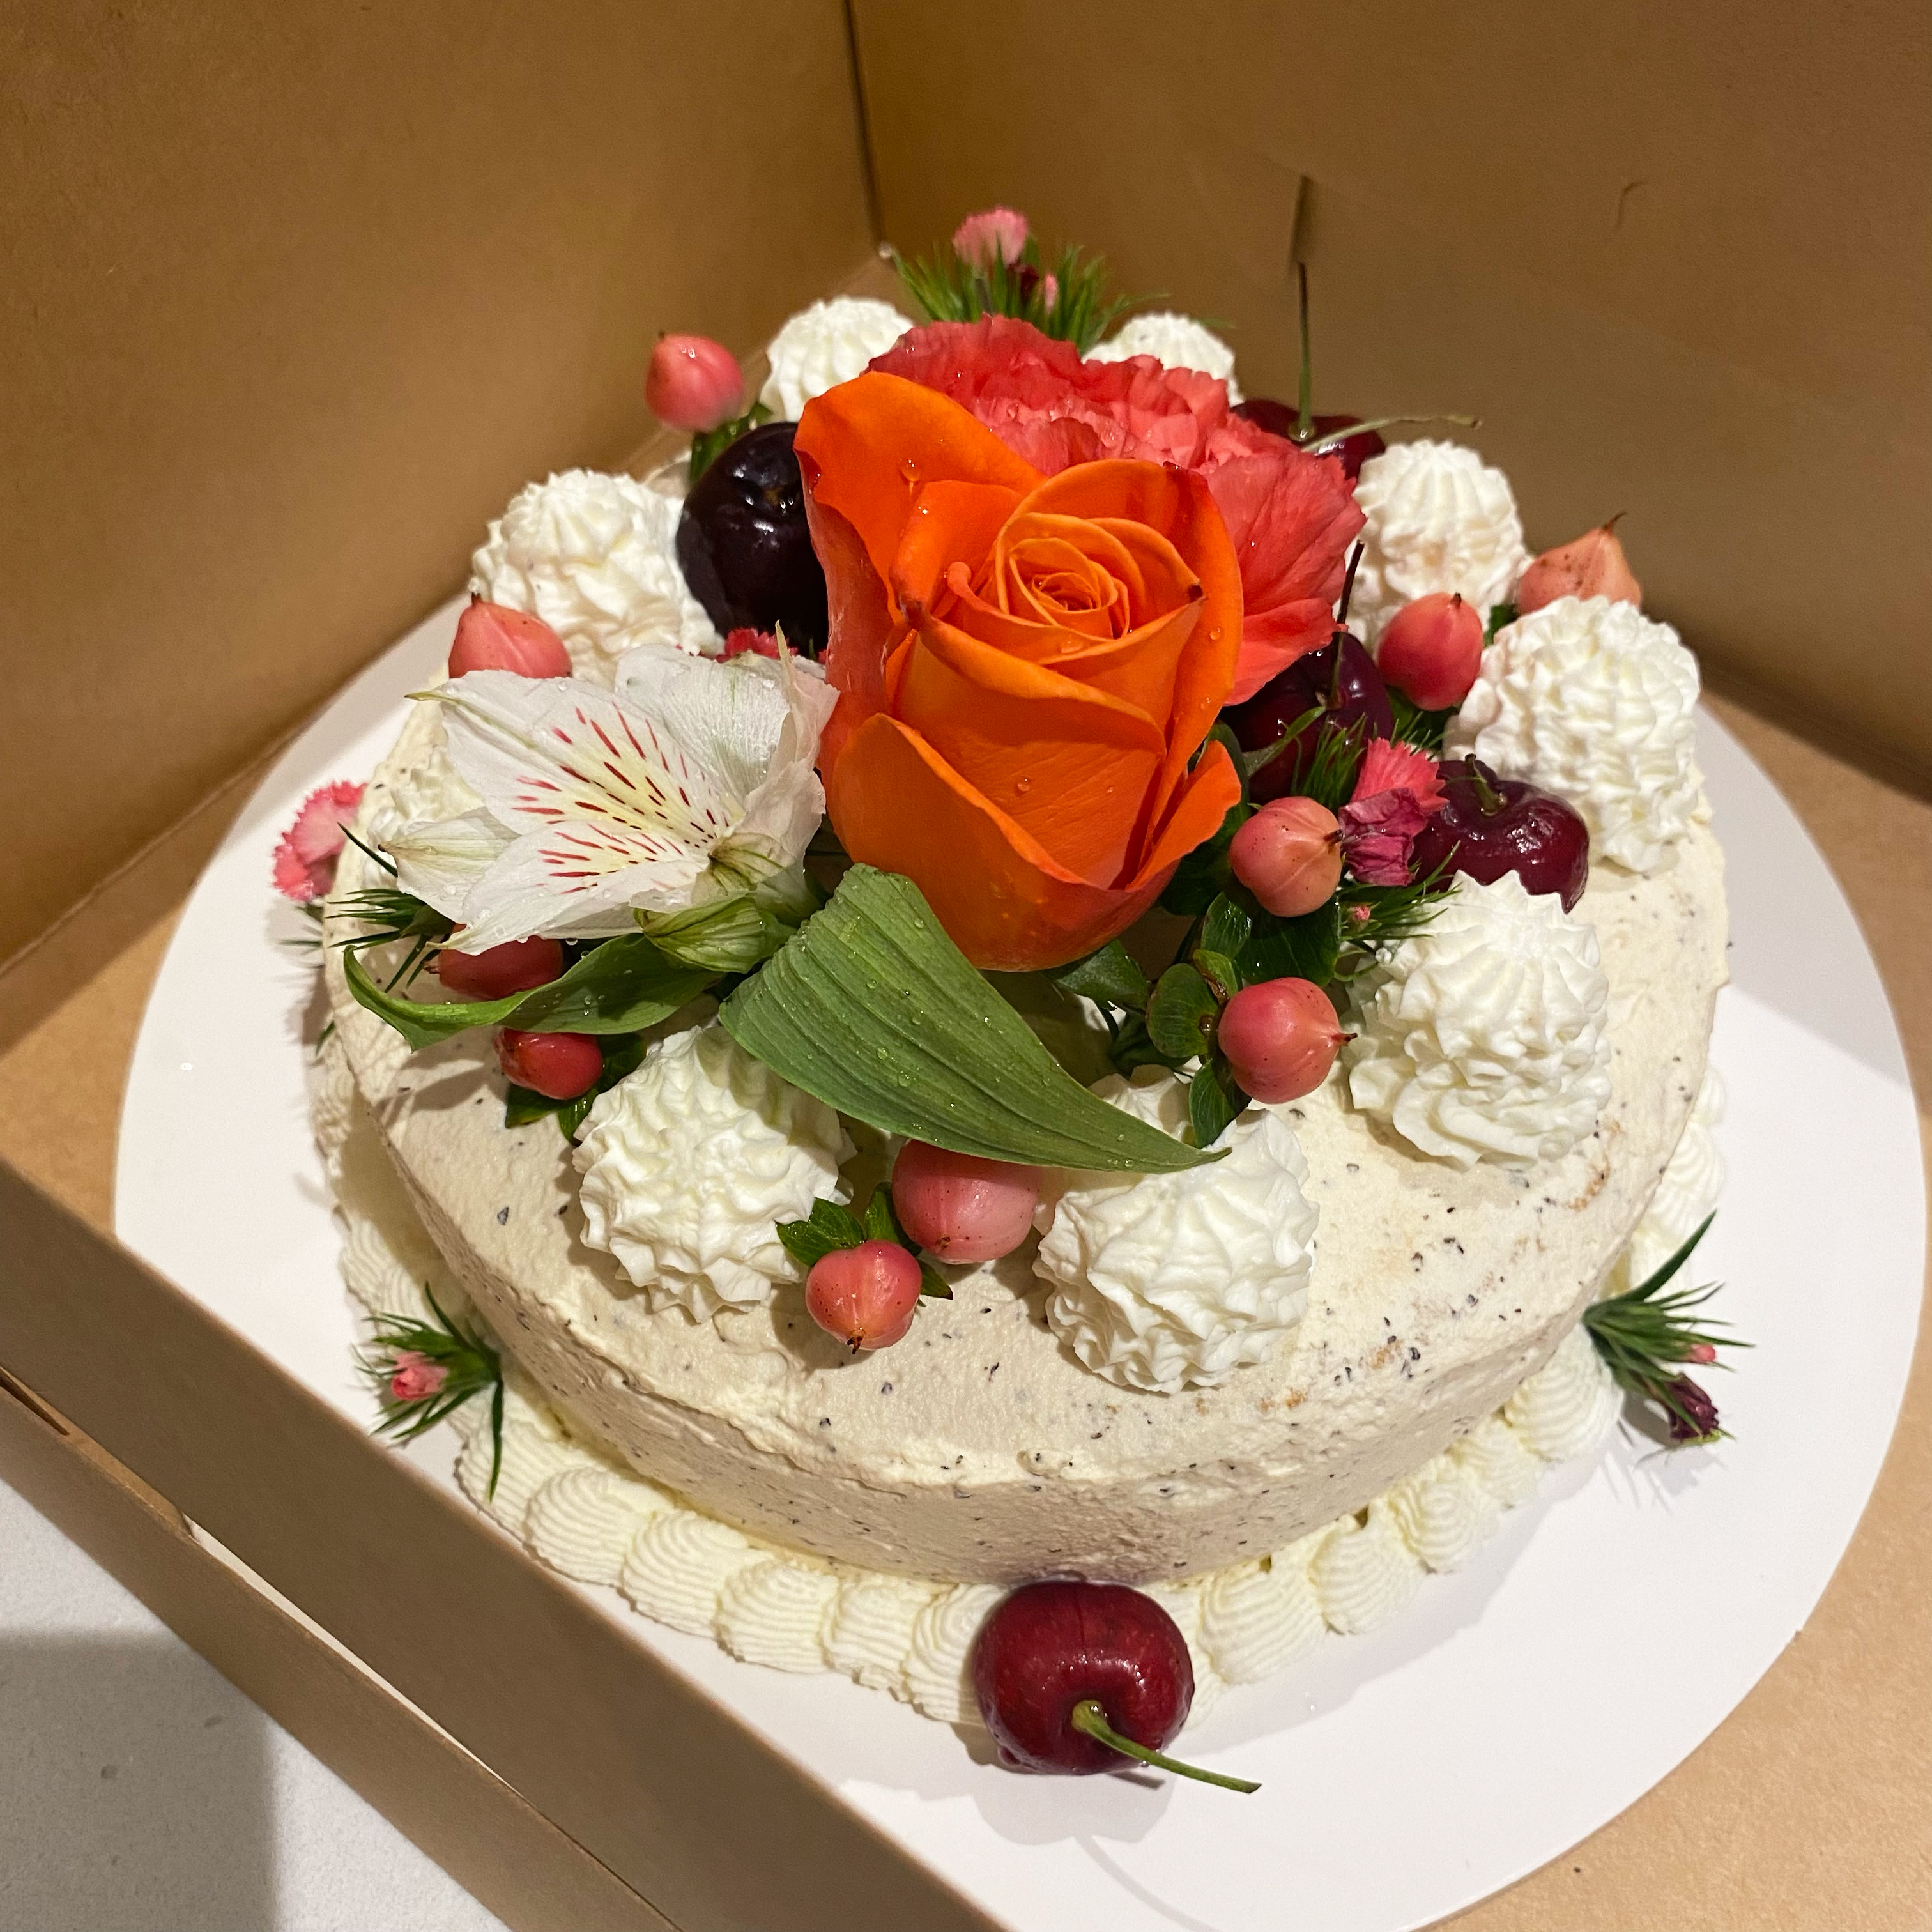 earl grey tea chiffon cake with flowers on top